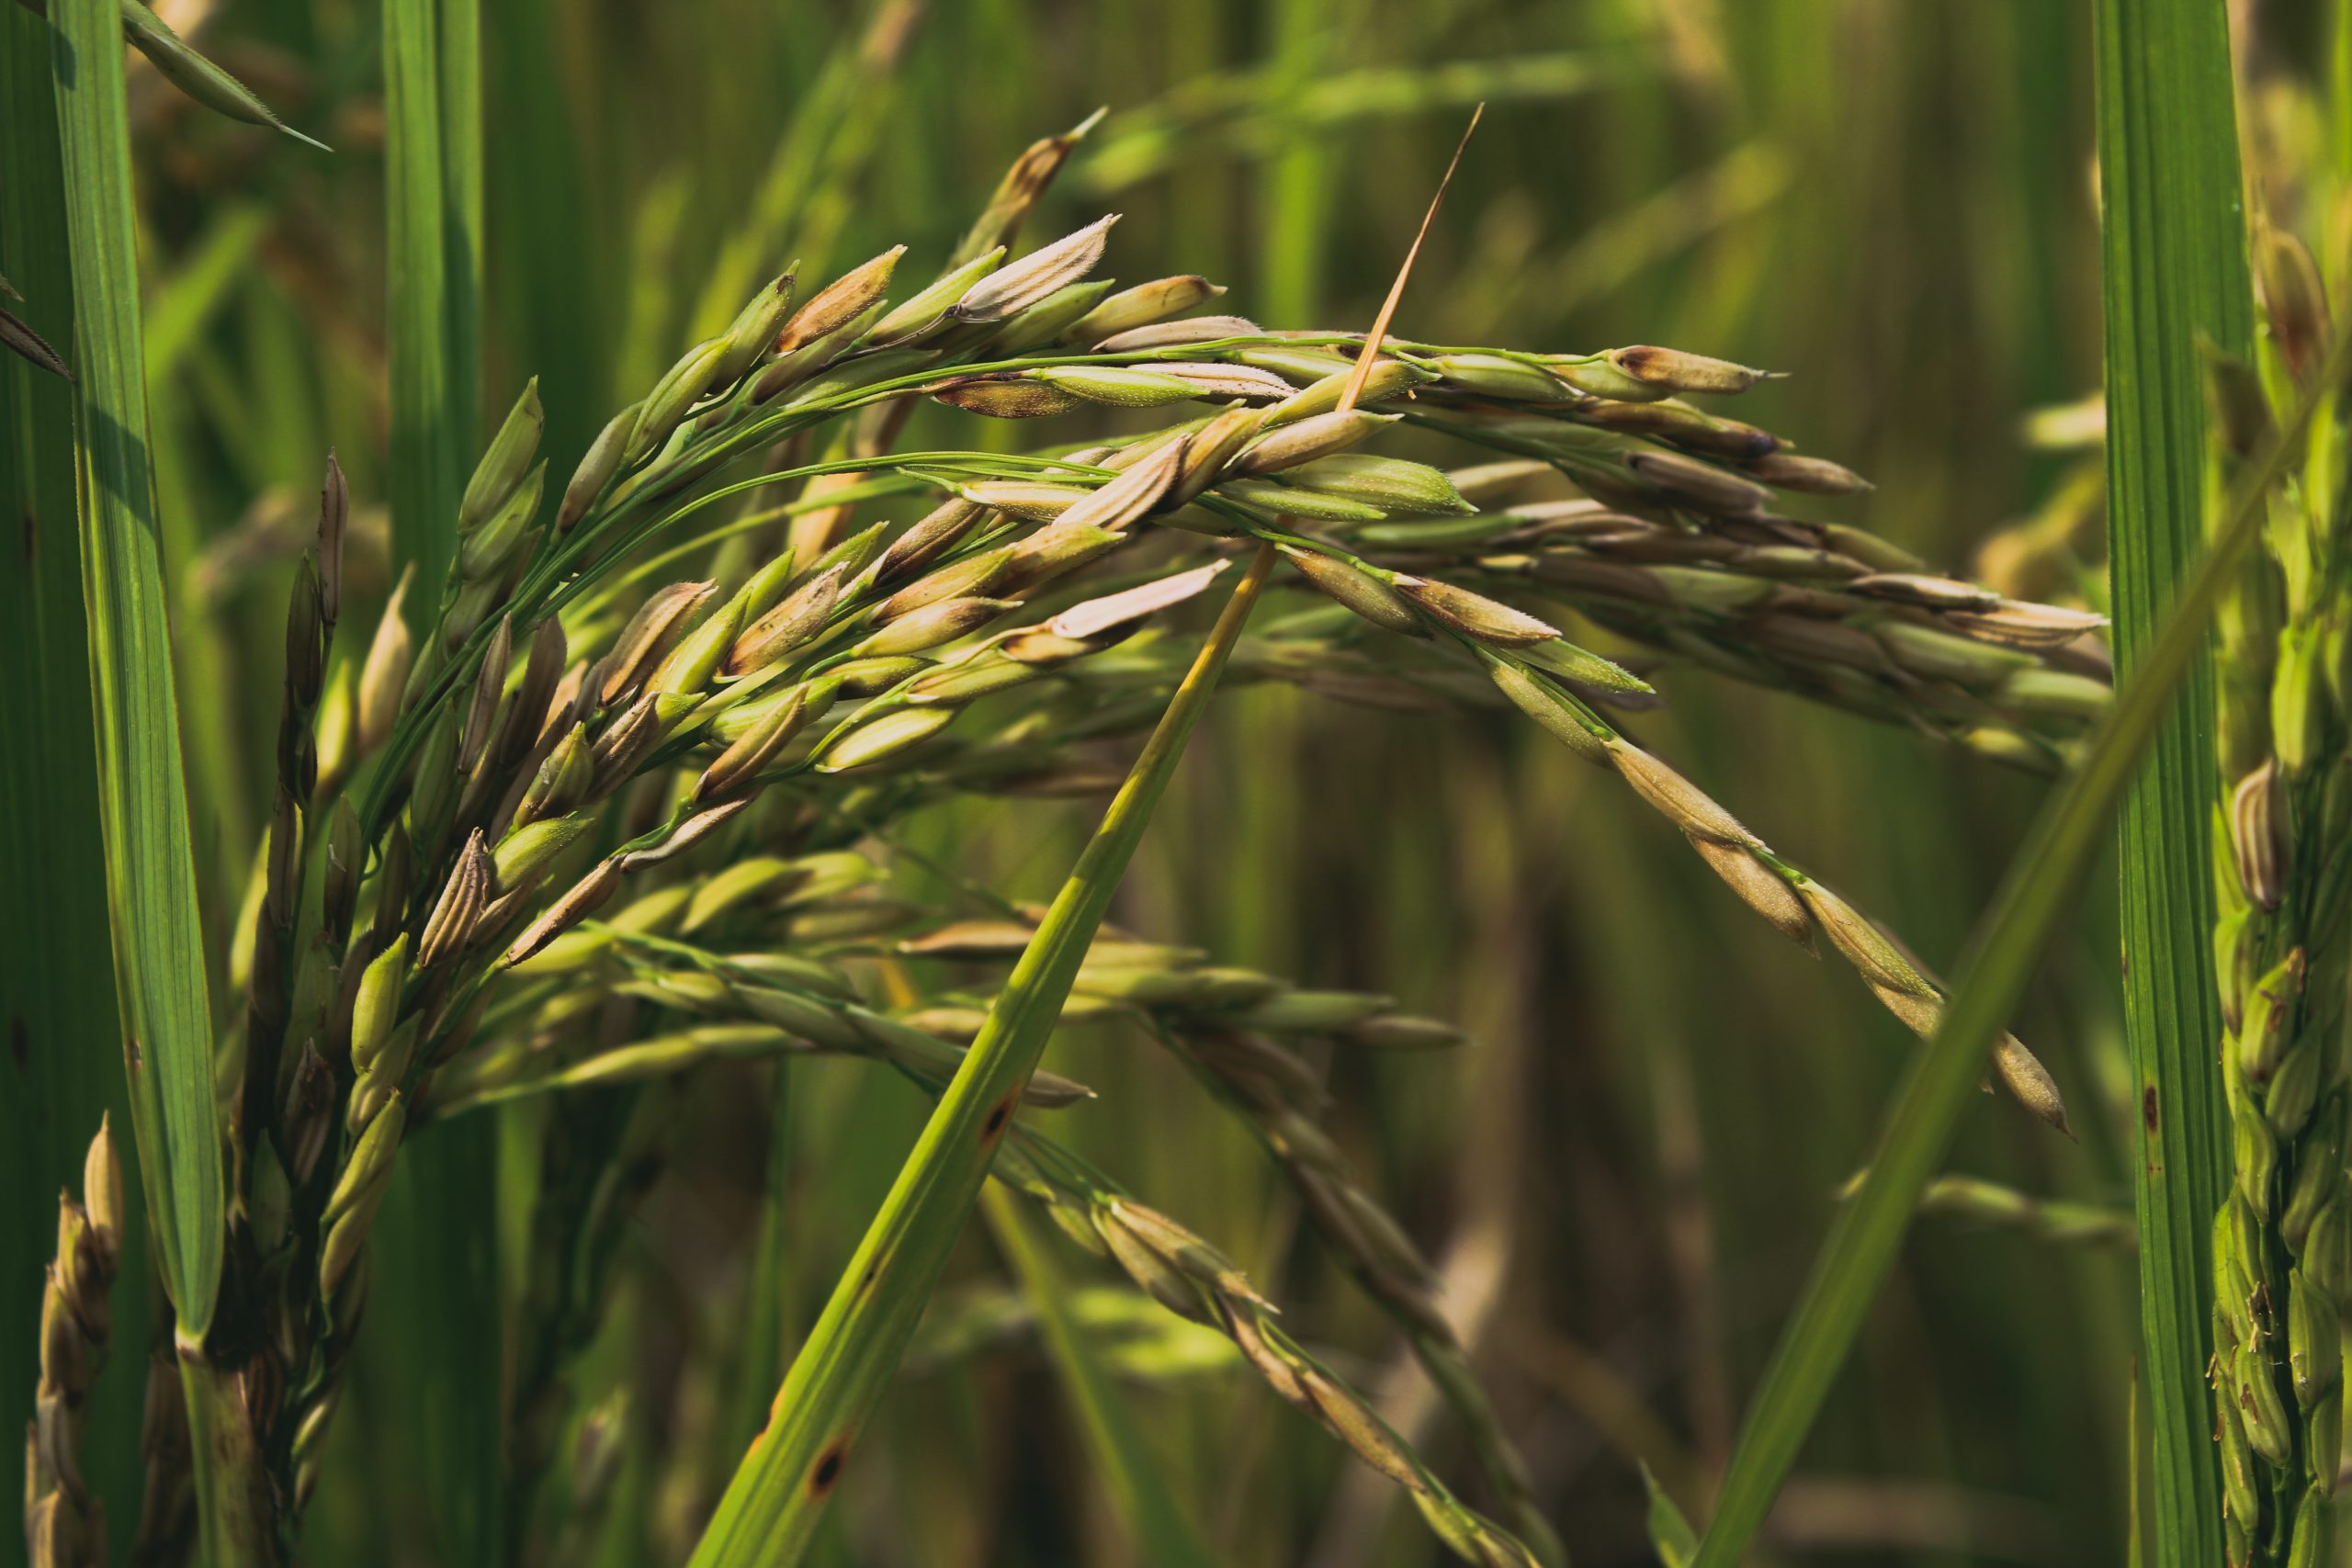 Wheat plant seeds